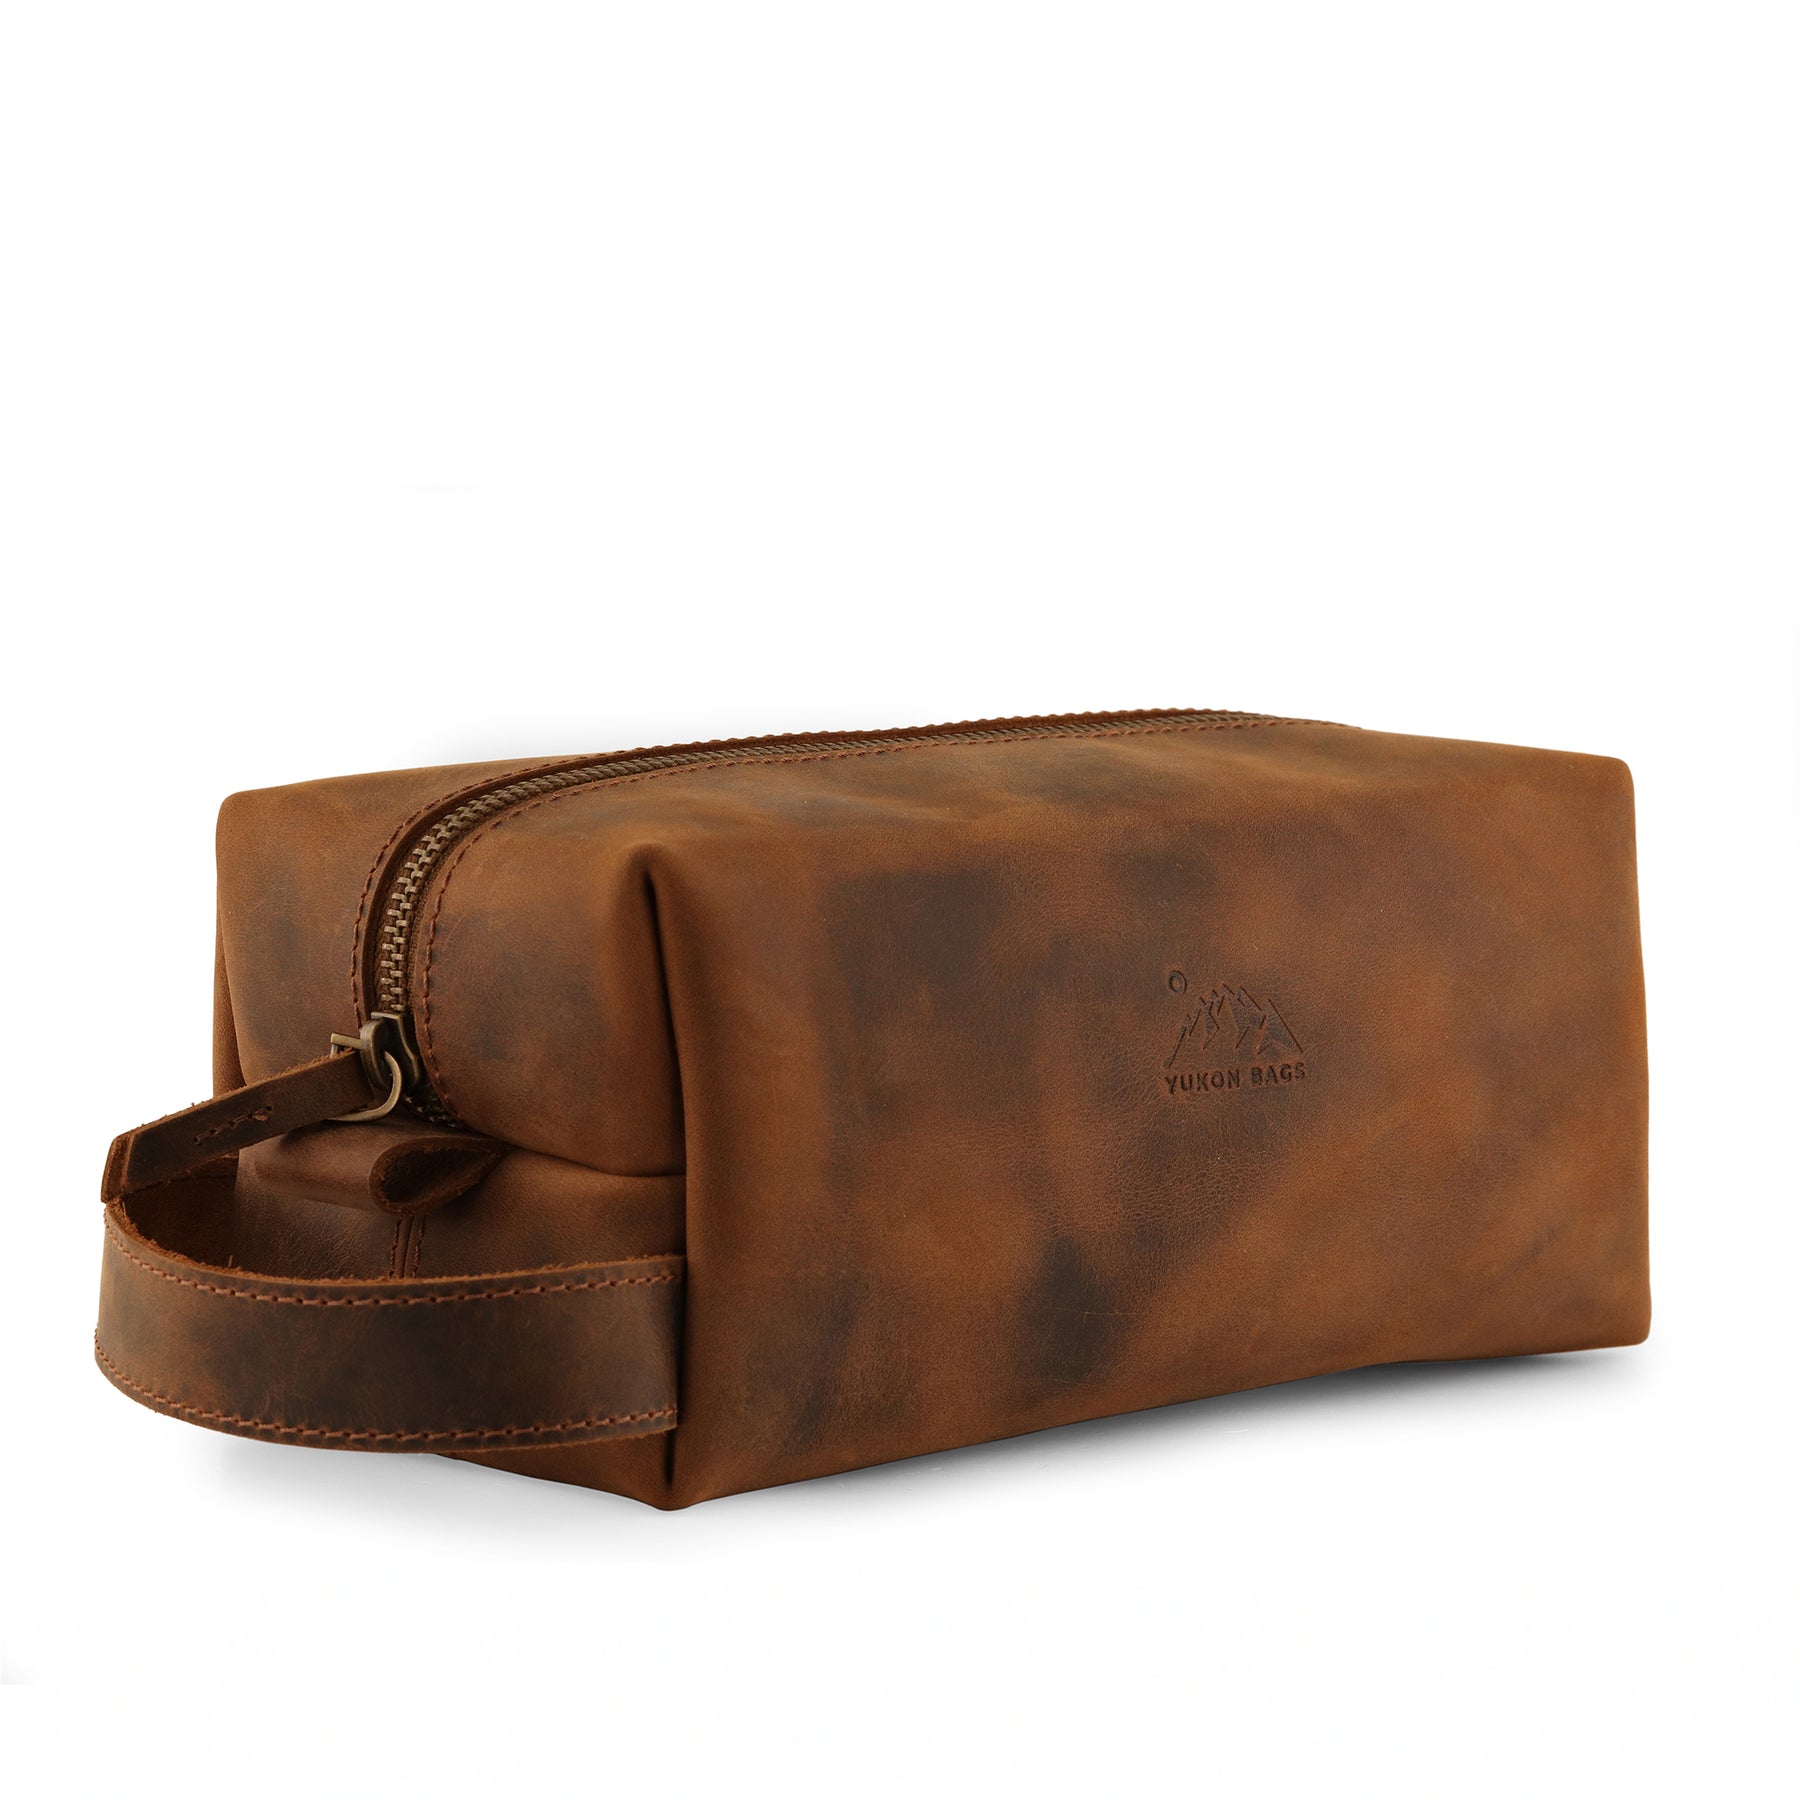 Dopp Kit Toiletry Bag Brown For Men 28cm/ 11 in M46696 